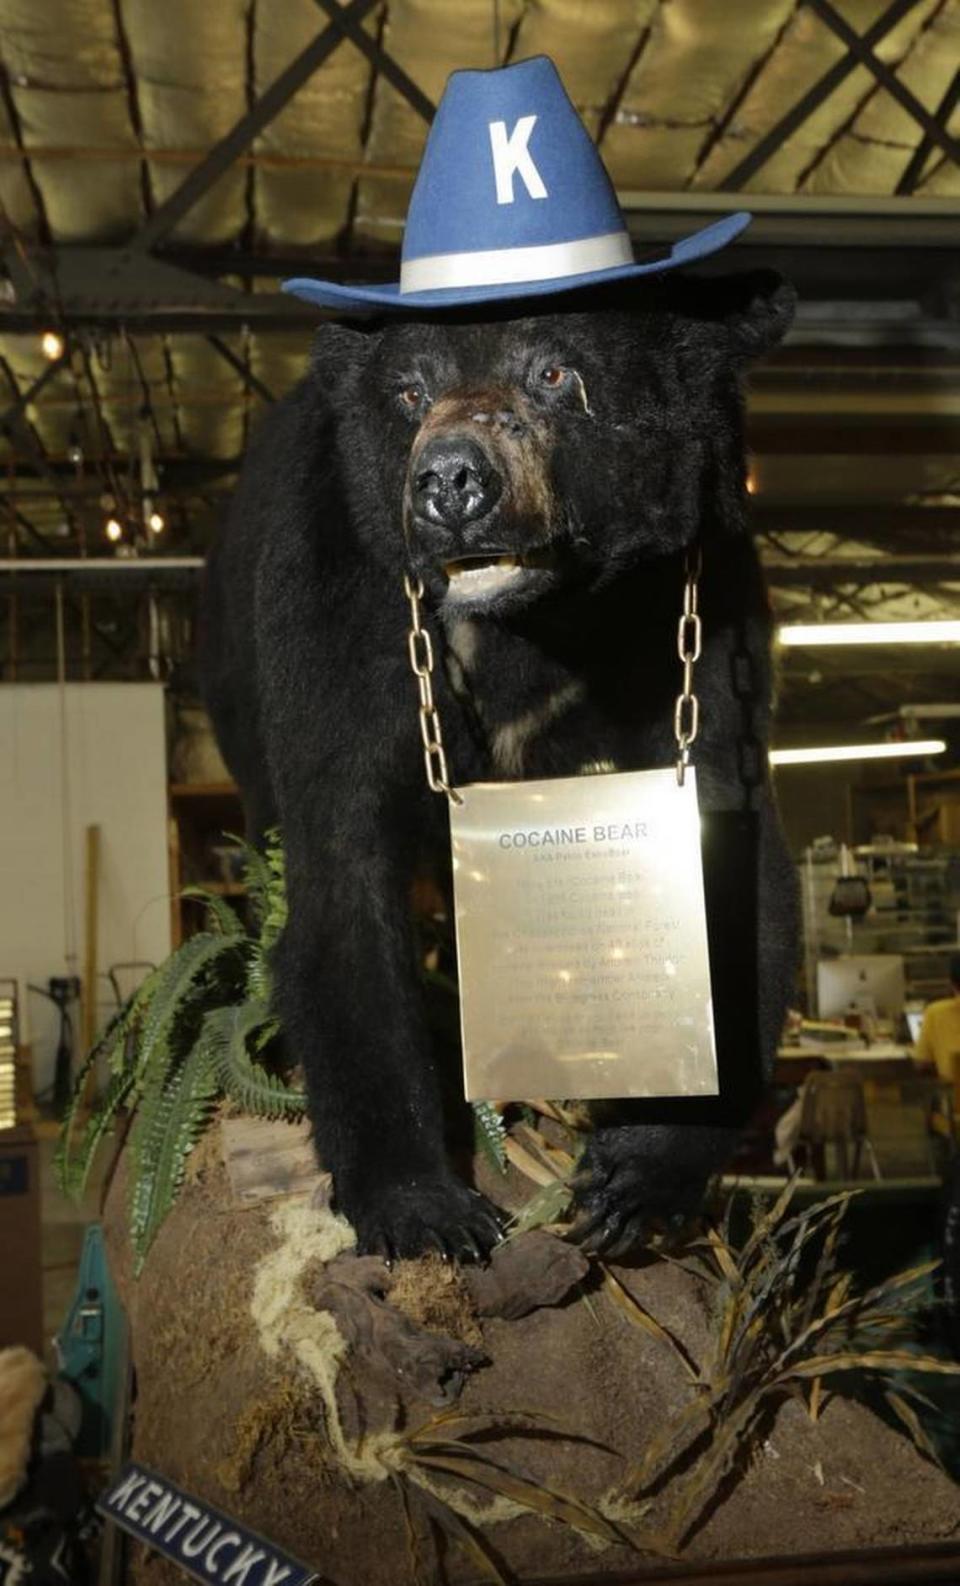 Cocaine Bear on display at the Kentucky Fun Mall on Bryan Avenue in Lexington.